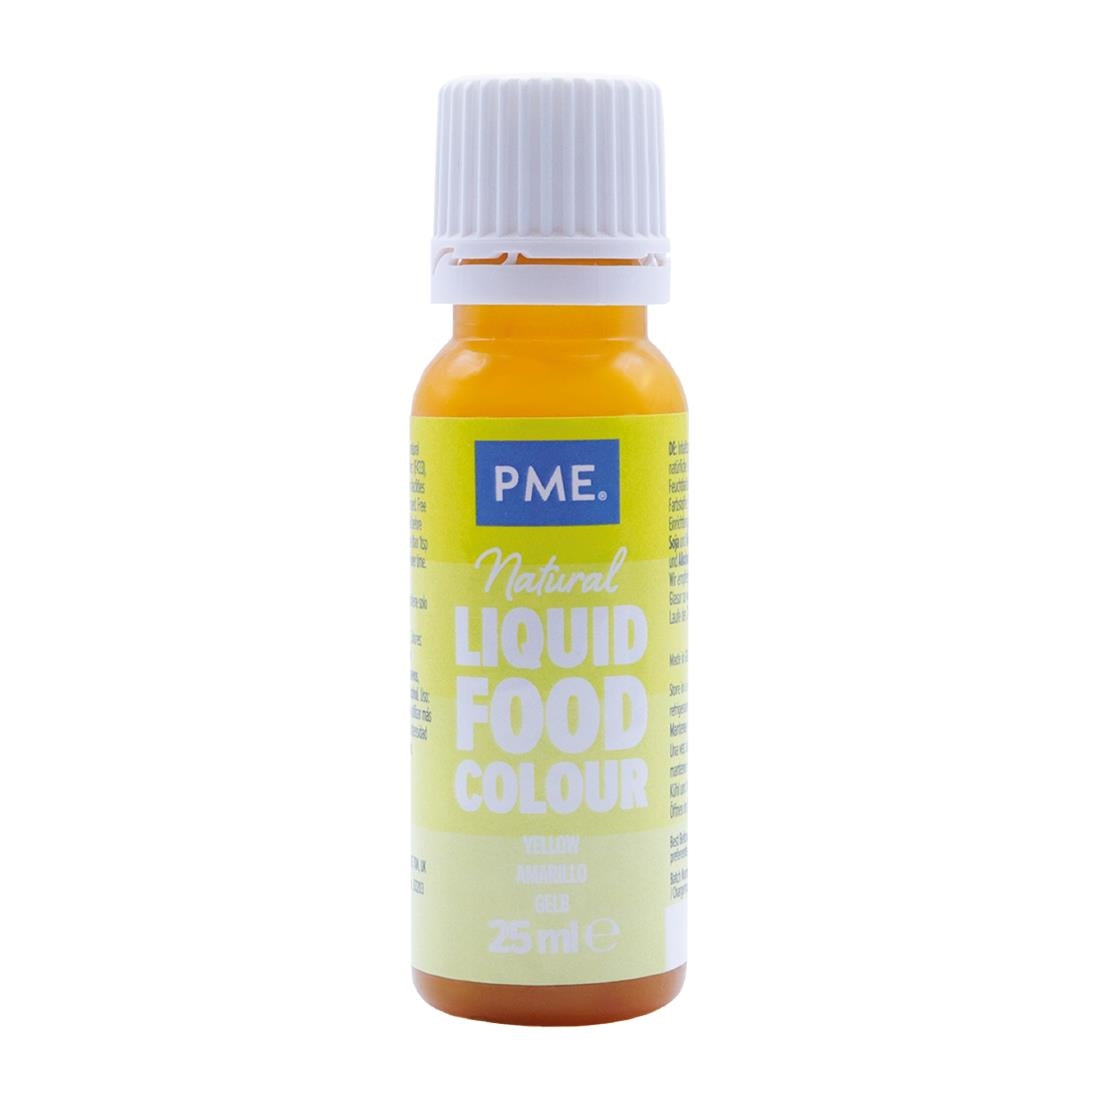 HU265 PME 100% Natural Food Colour - Lemon Yellow 25g